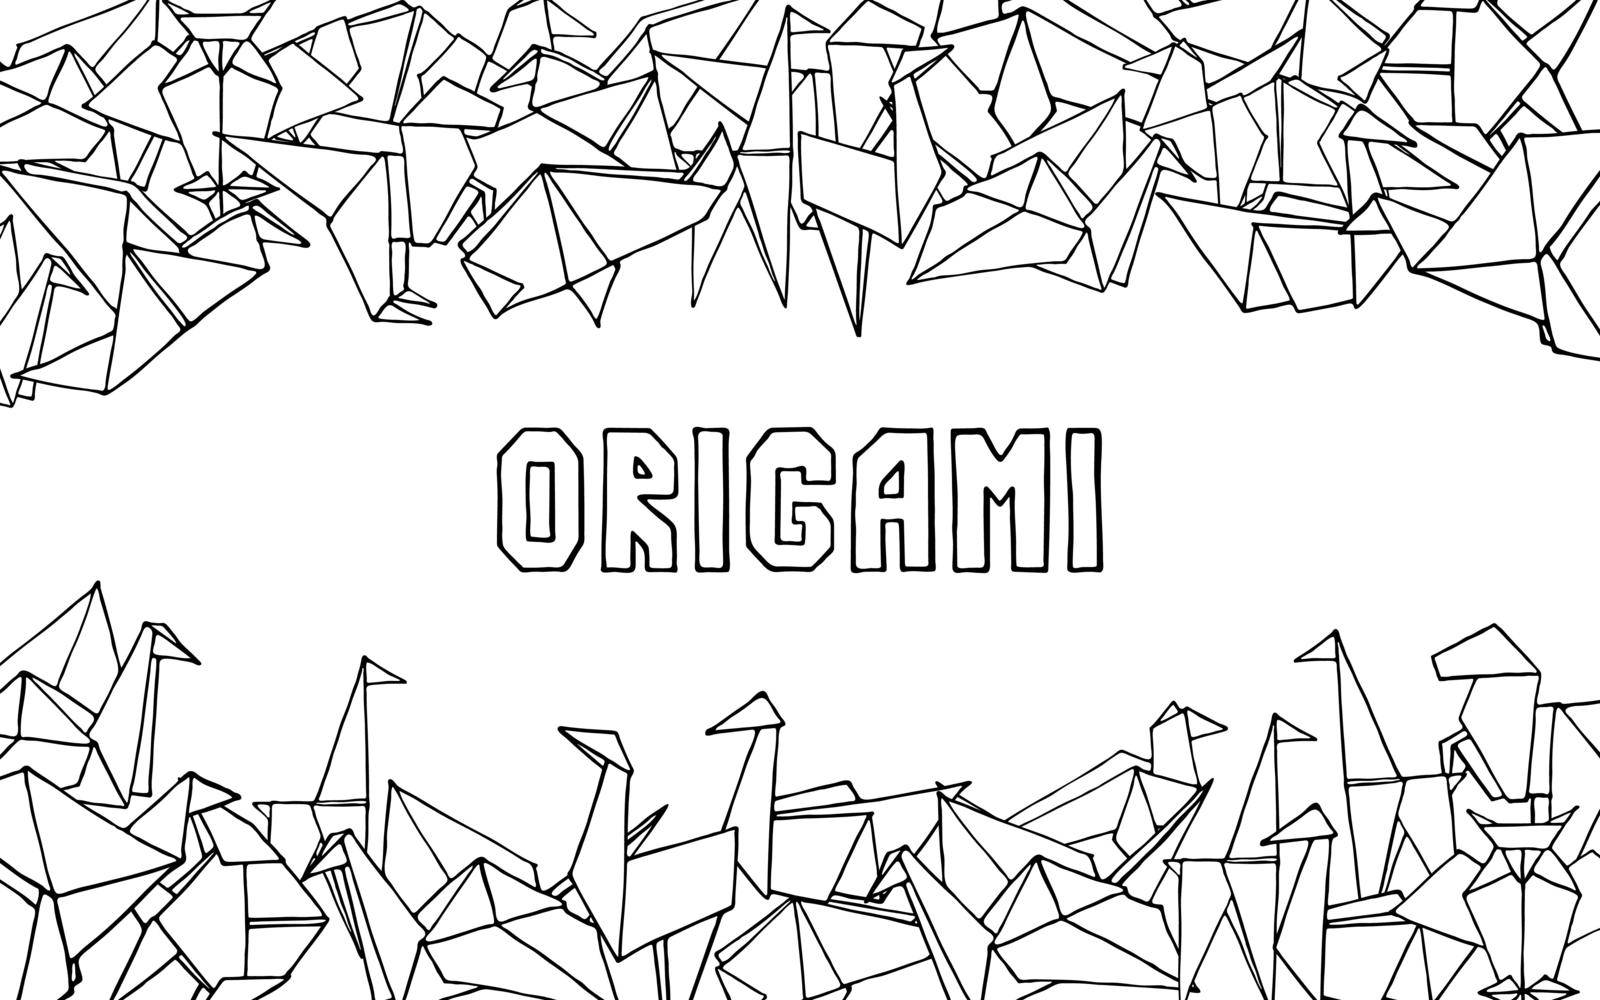 Origami animals background. Hand drawn doodle border. Minimalistic vector illustration